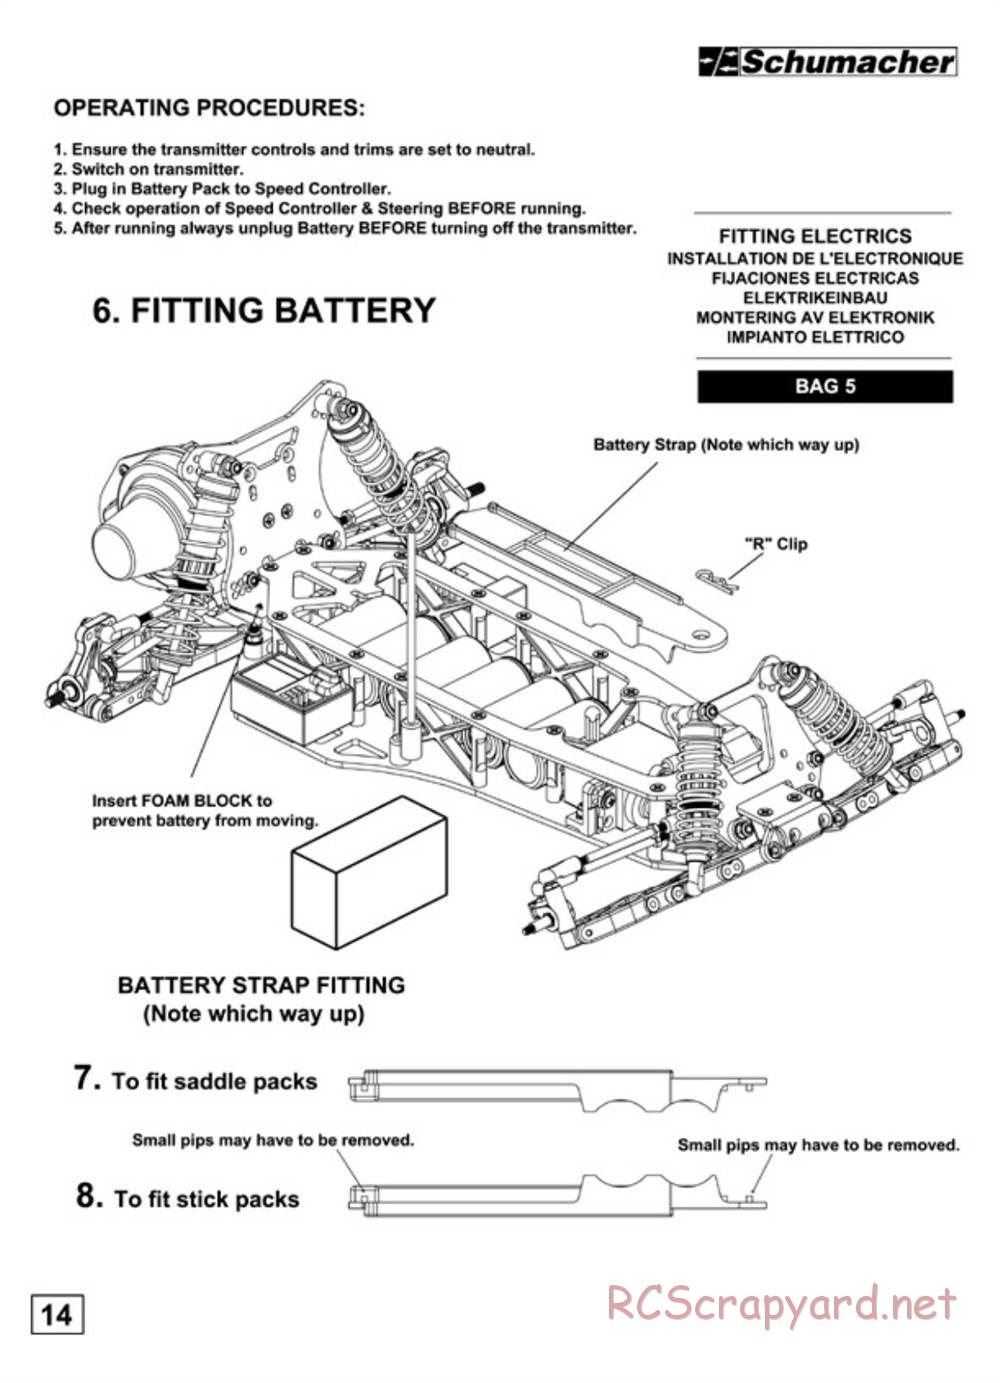 Schumacher - Fireblade Evo - Manual - Page 16